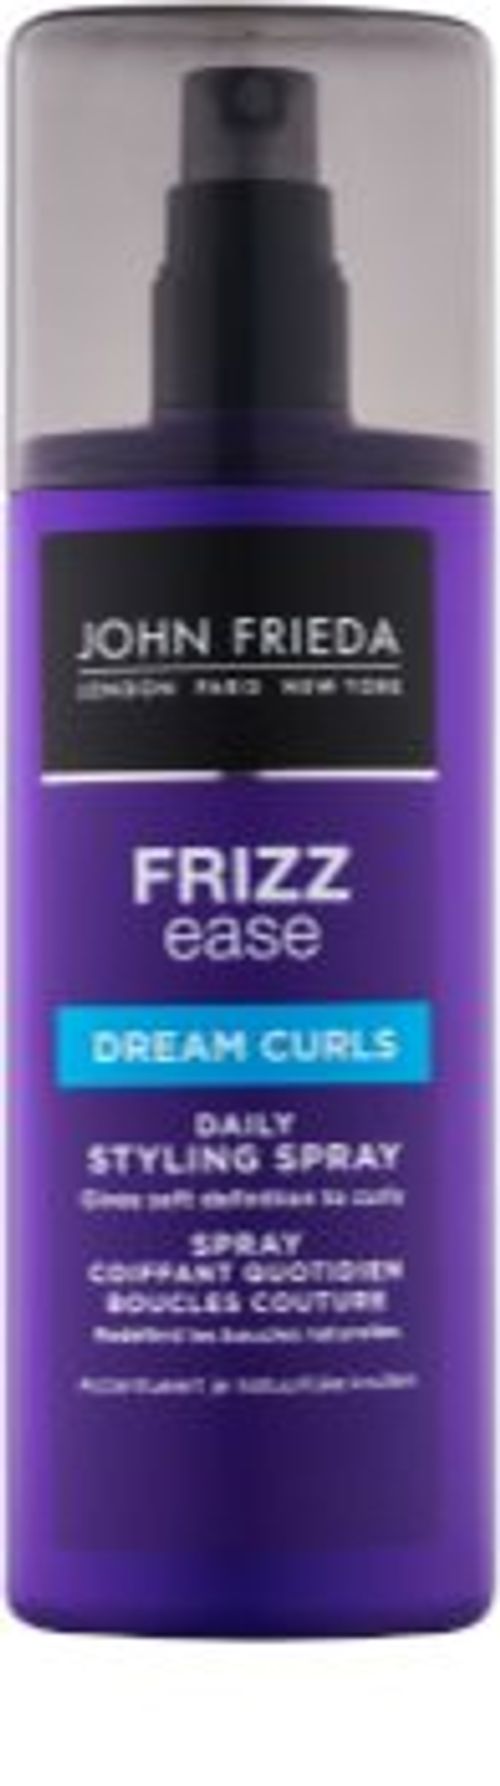 John Frieda Frizz Ease Dream Curls Wave Defining Styling Spray